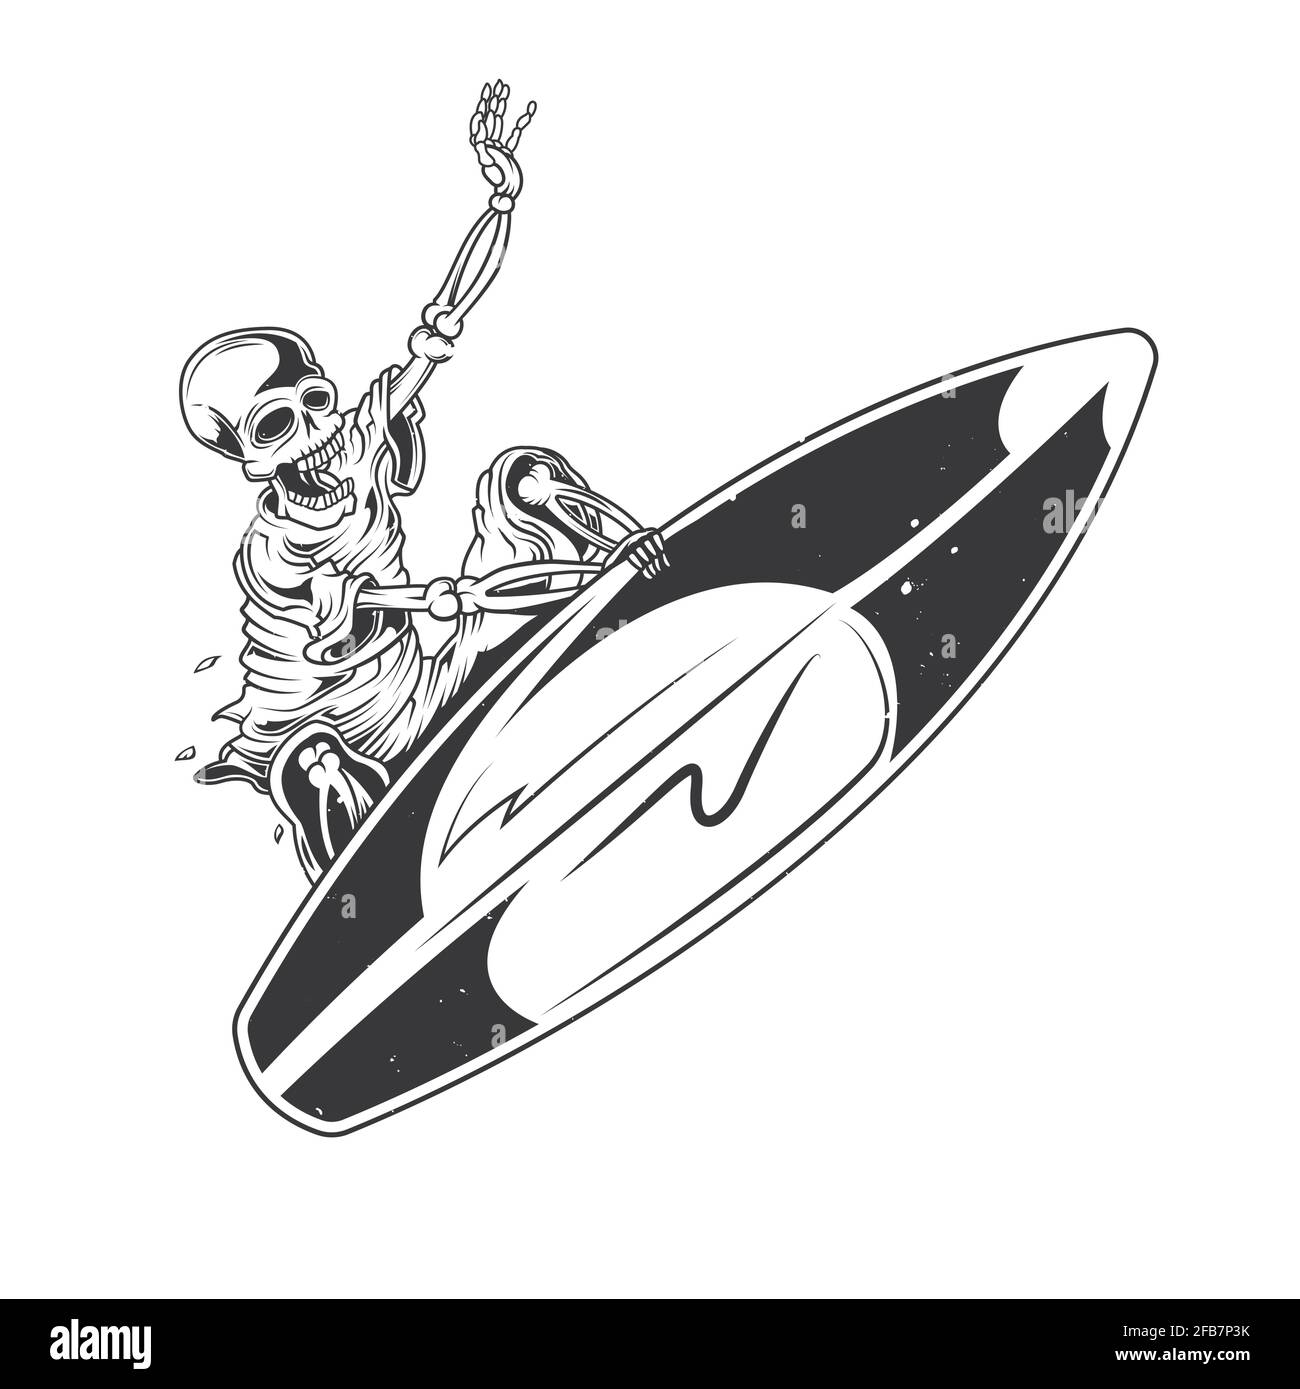 Illustration of skeleton on surfing board Stock Vector